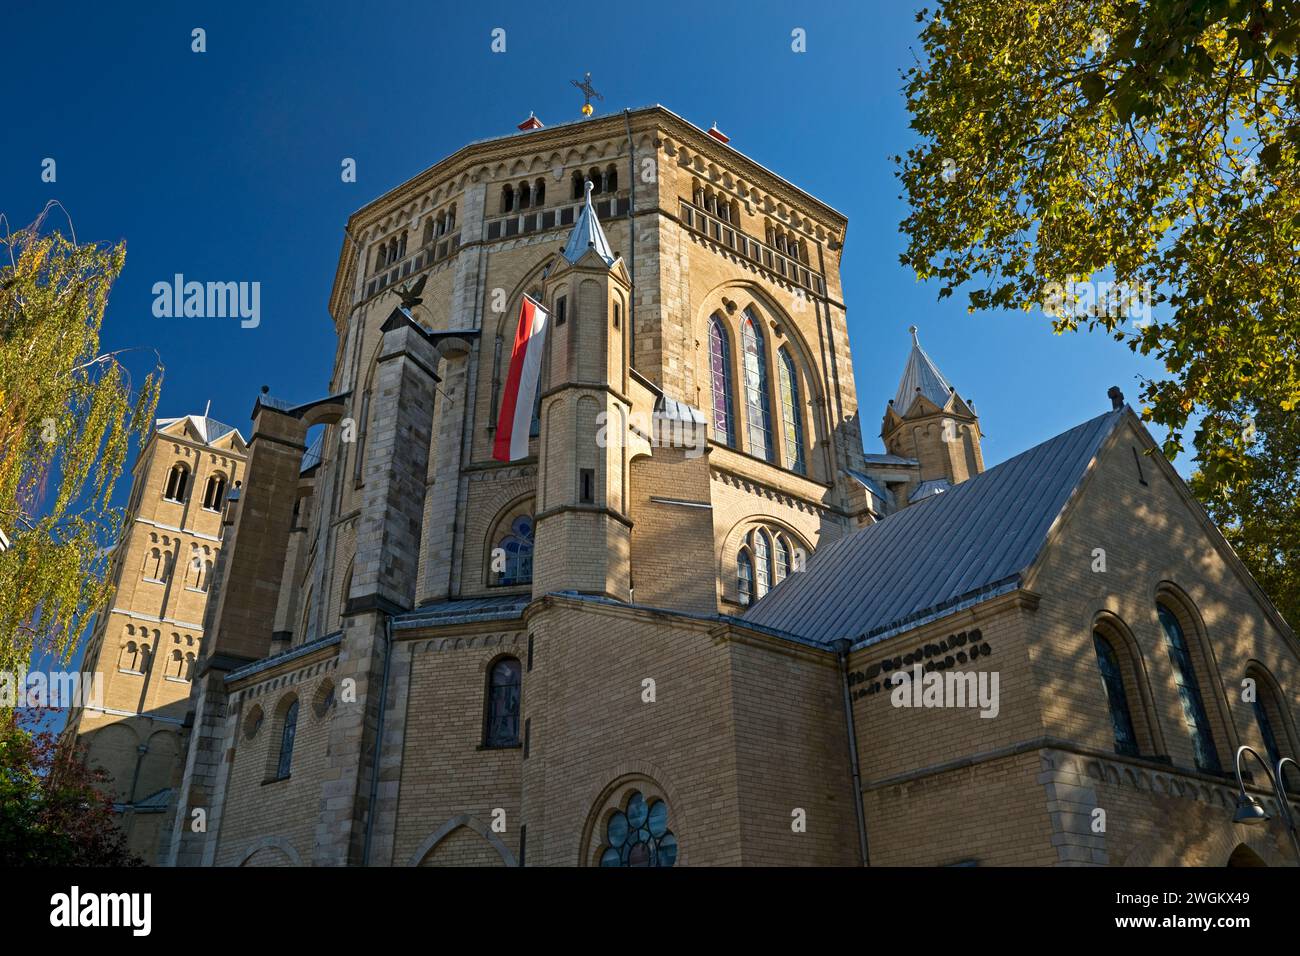 Prog Gereon, église romane, Allemagne, Rhénanie du Nord-Westphalie, Cologne Banque D'Images